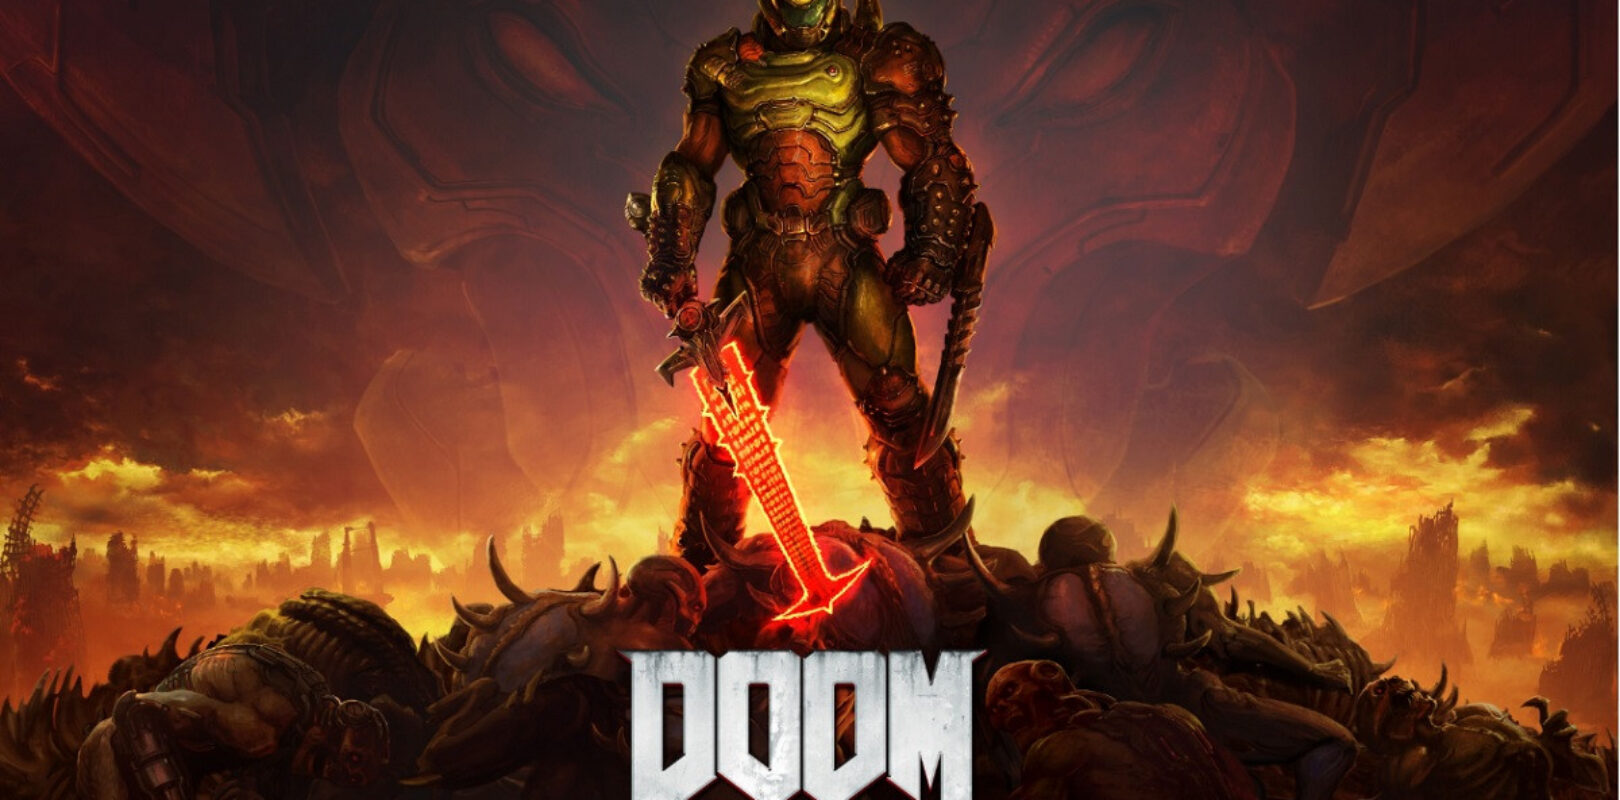 Дум тернер. Doom (игра, 2016).